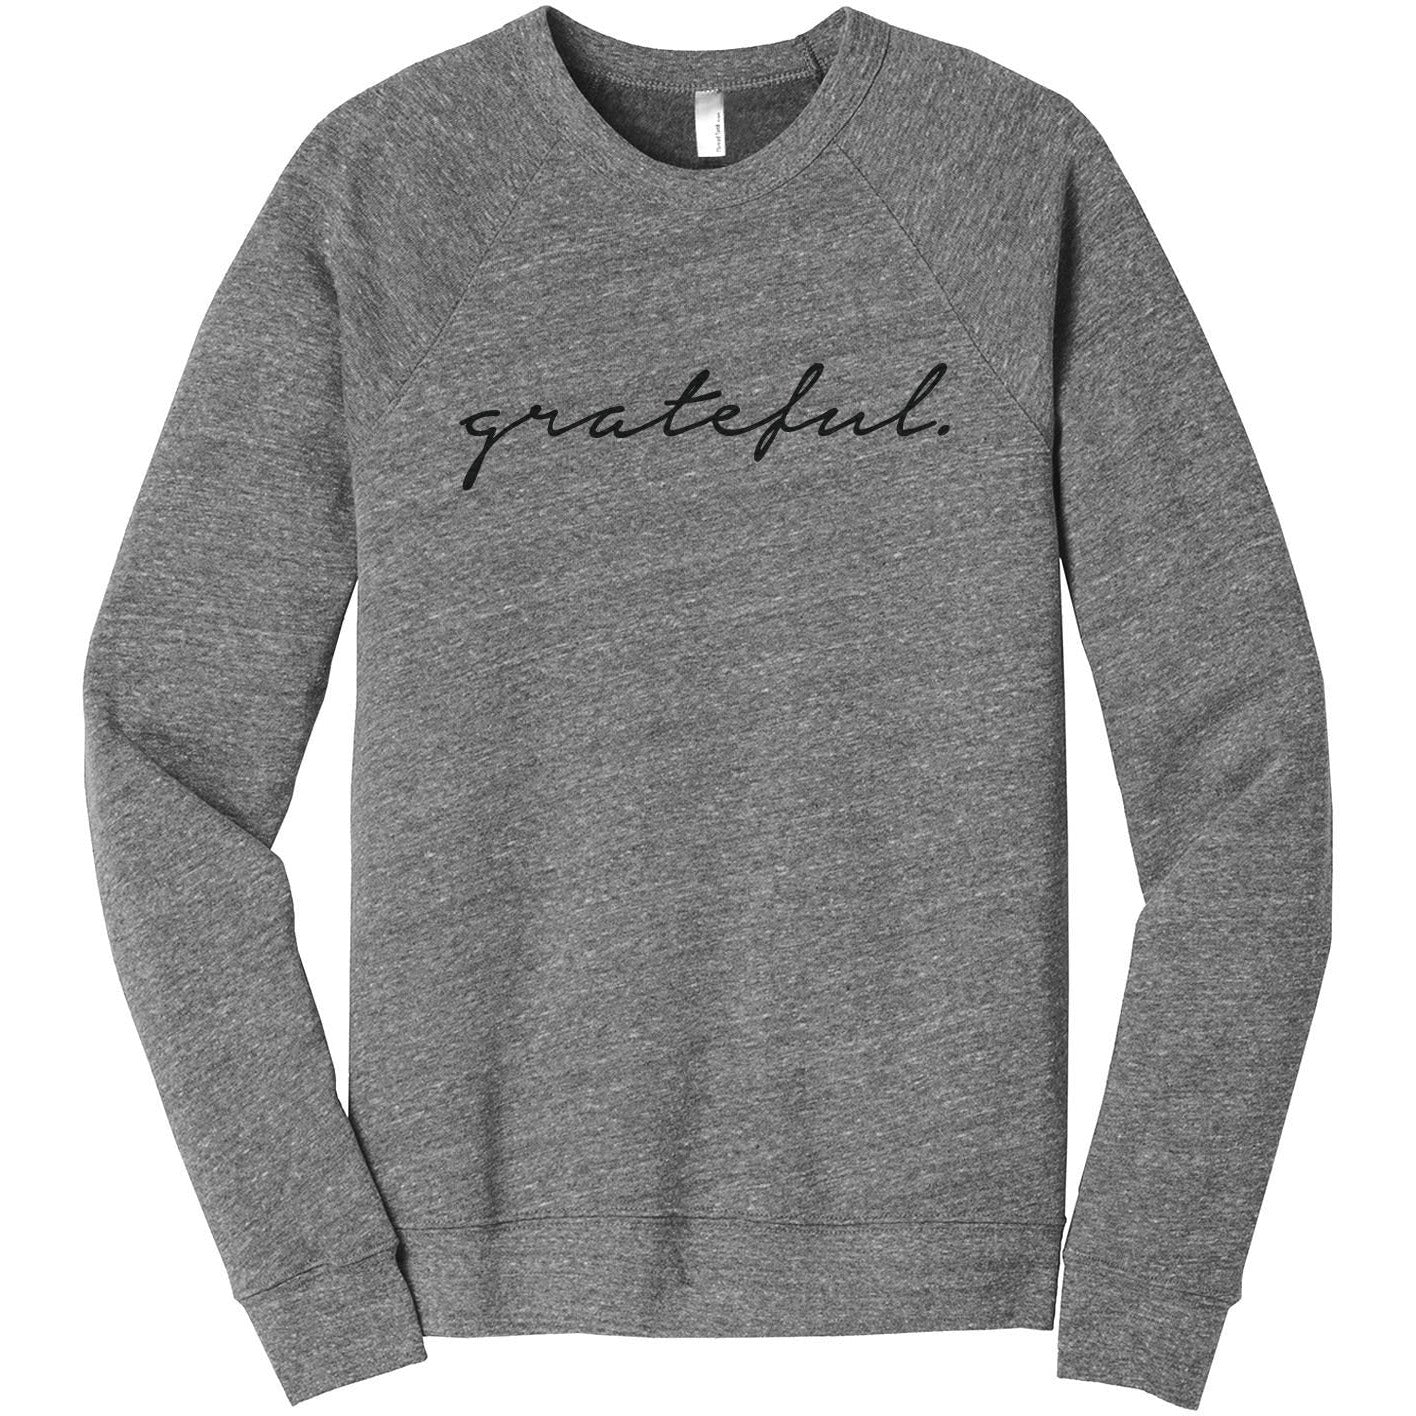 Grateful Women's Cozy Fleece Longsleeves Sweater Heather Grey FRONT